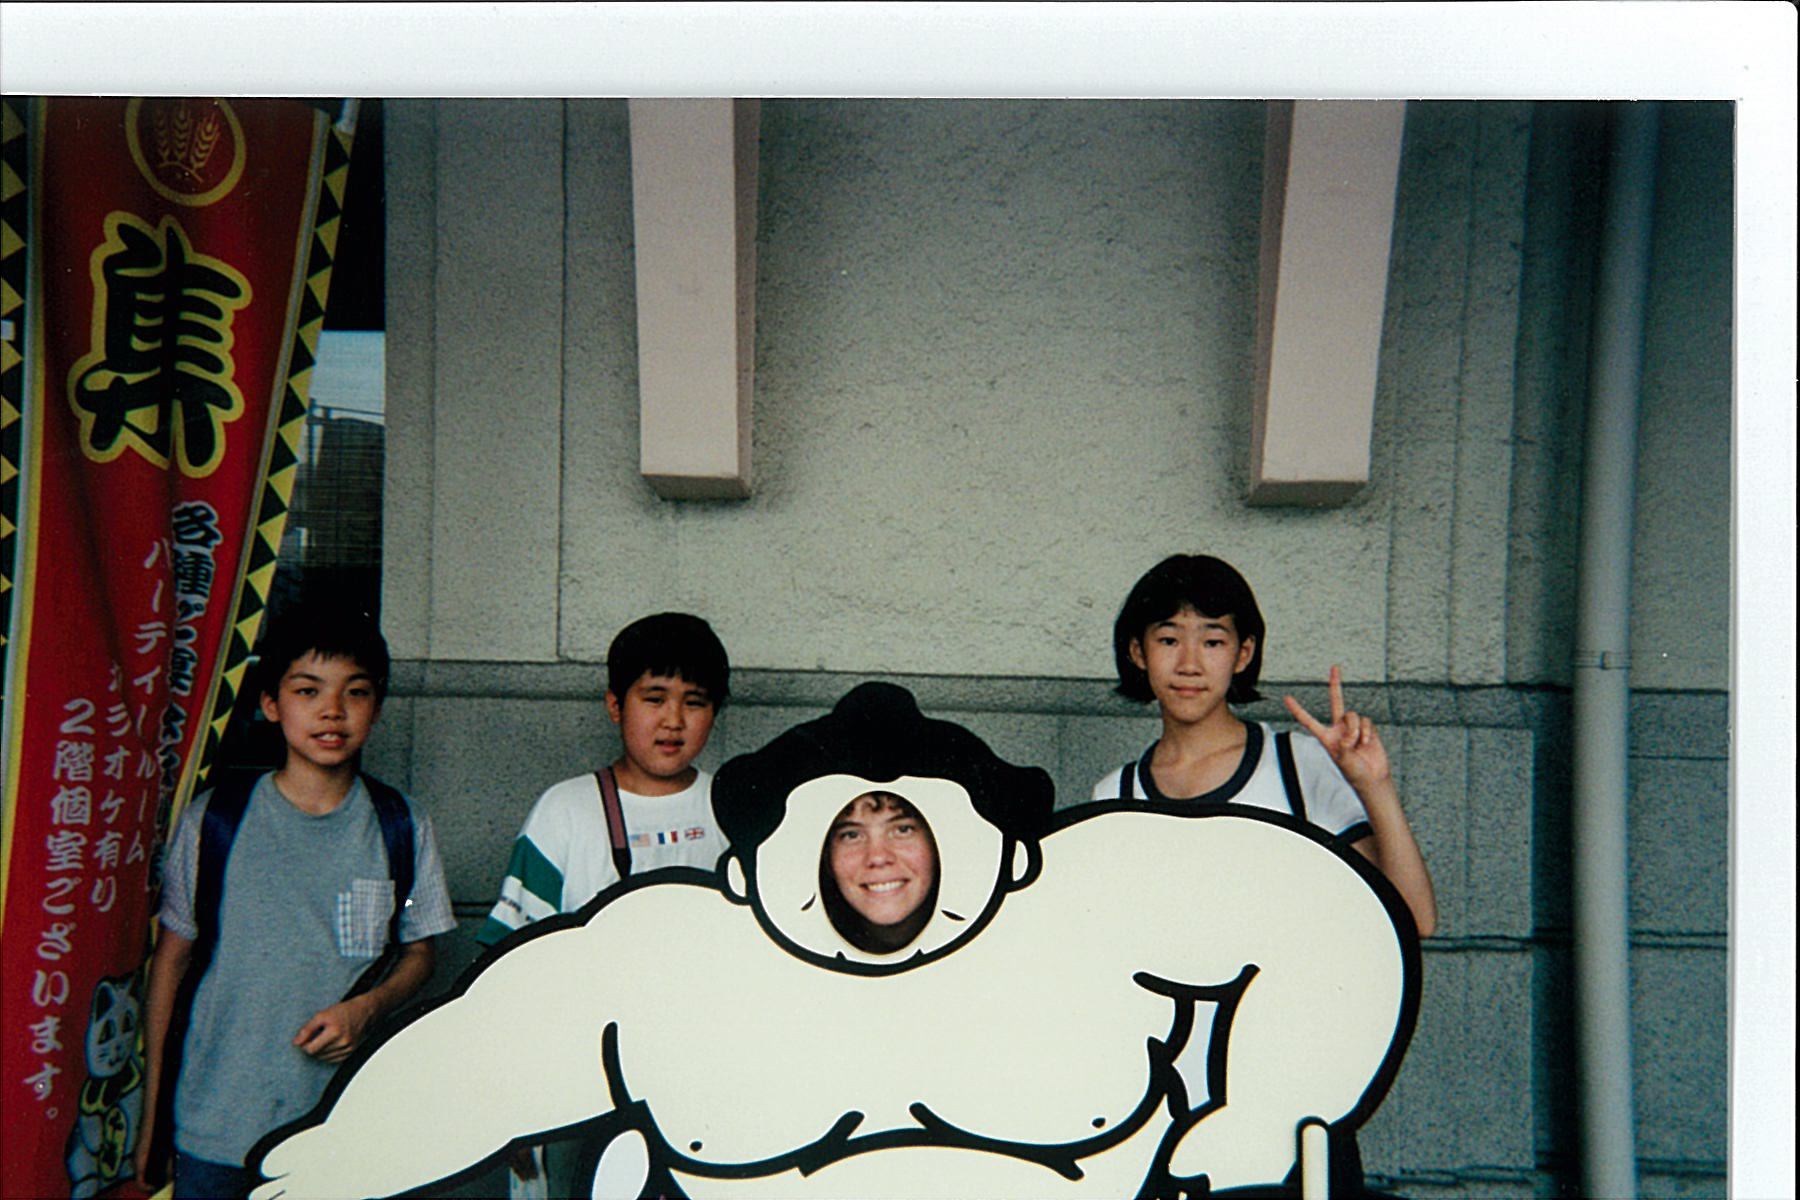 Posing as a sumo wrestler in Chiba Japan 